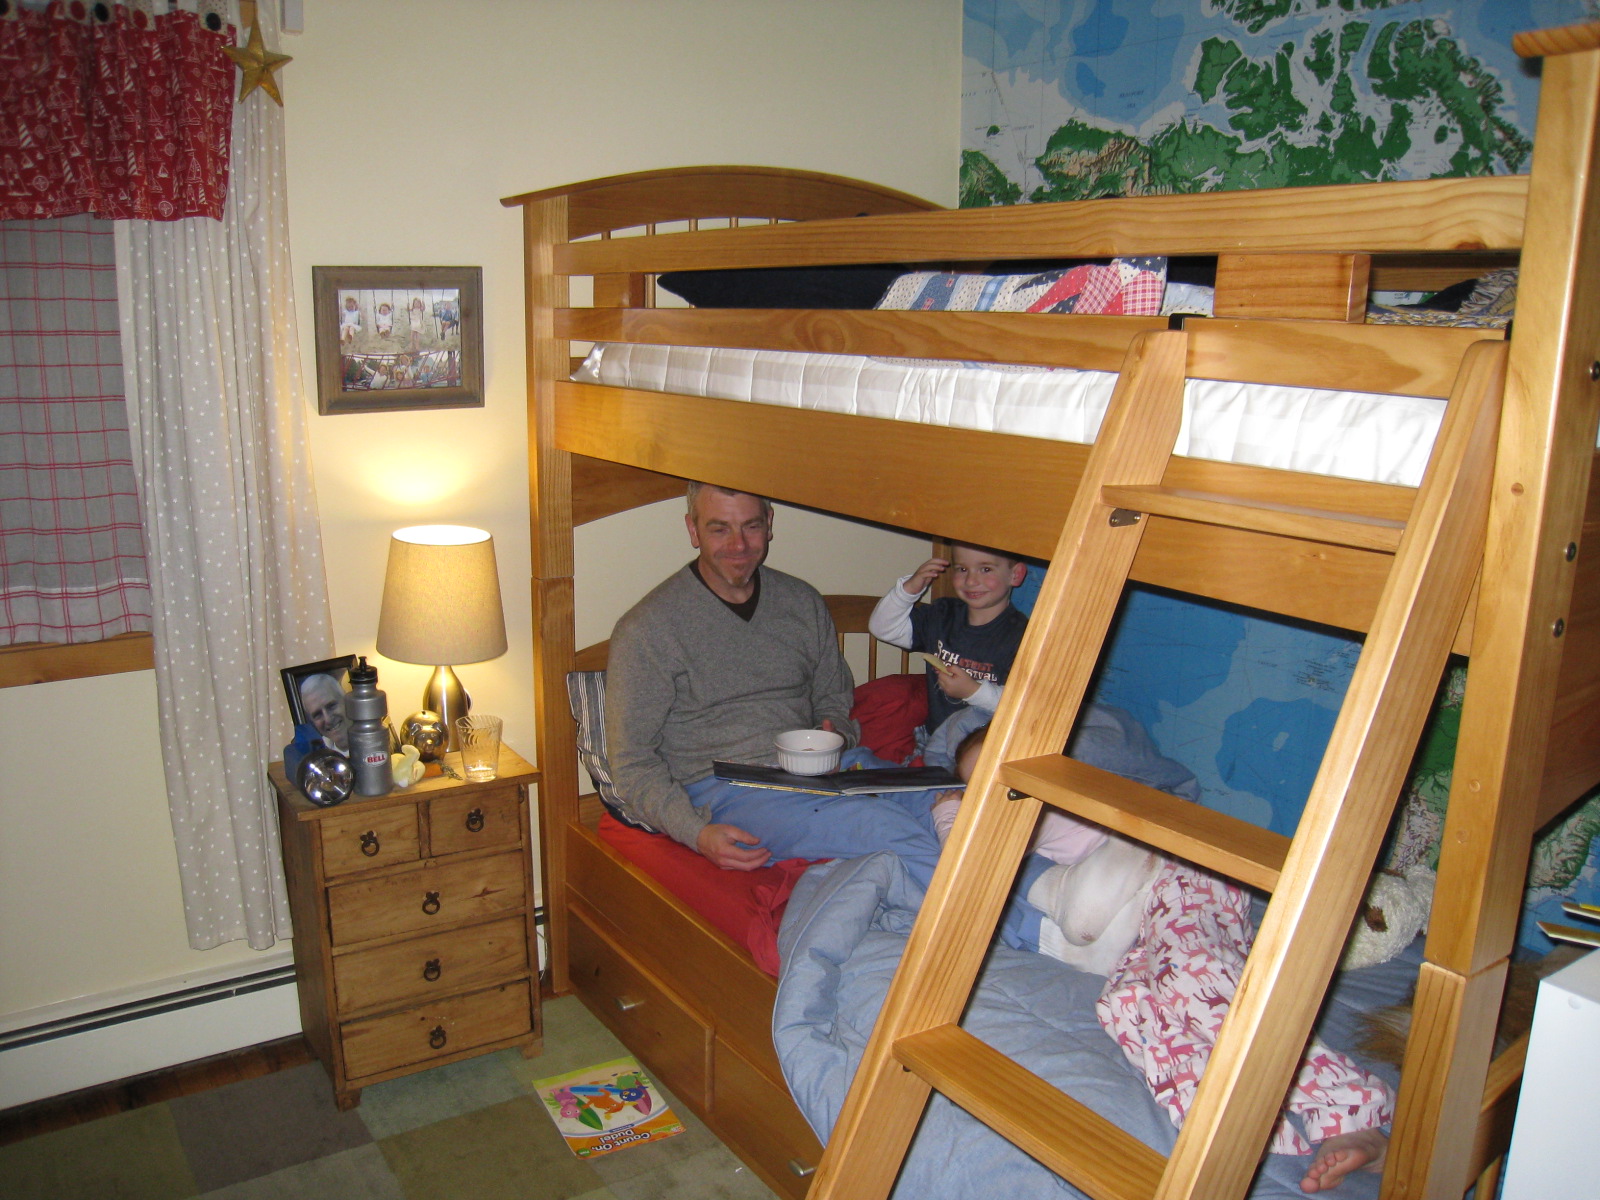 bob furniture bunk bed